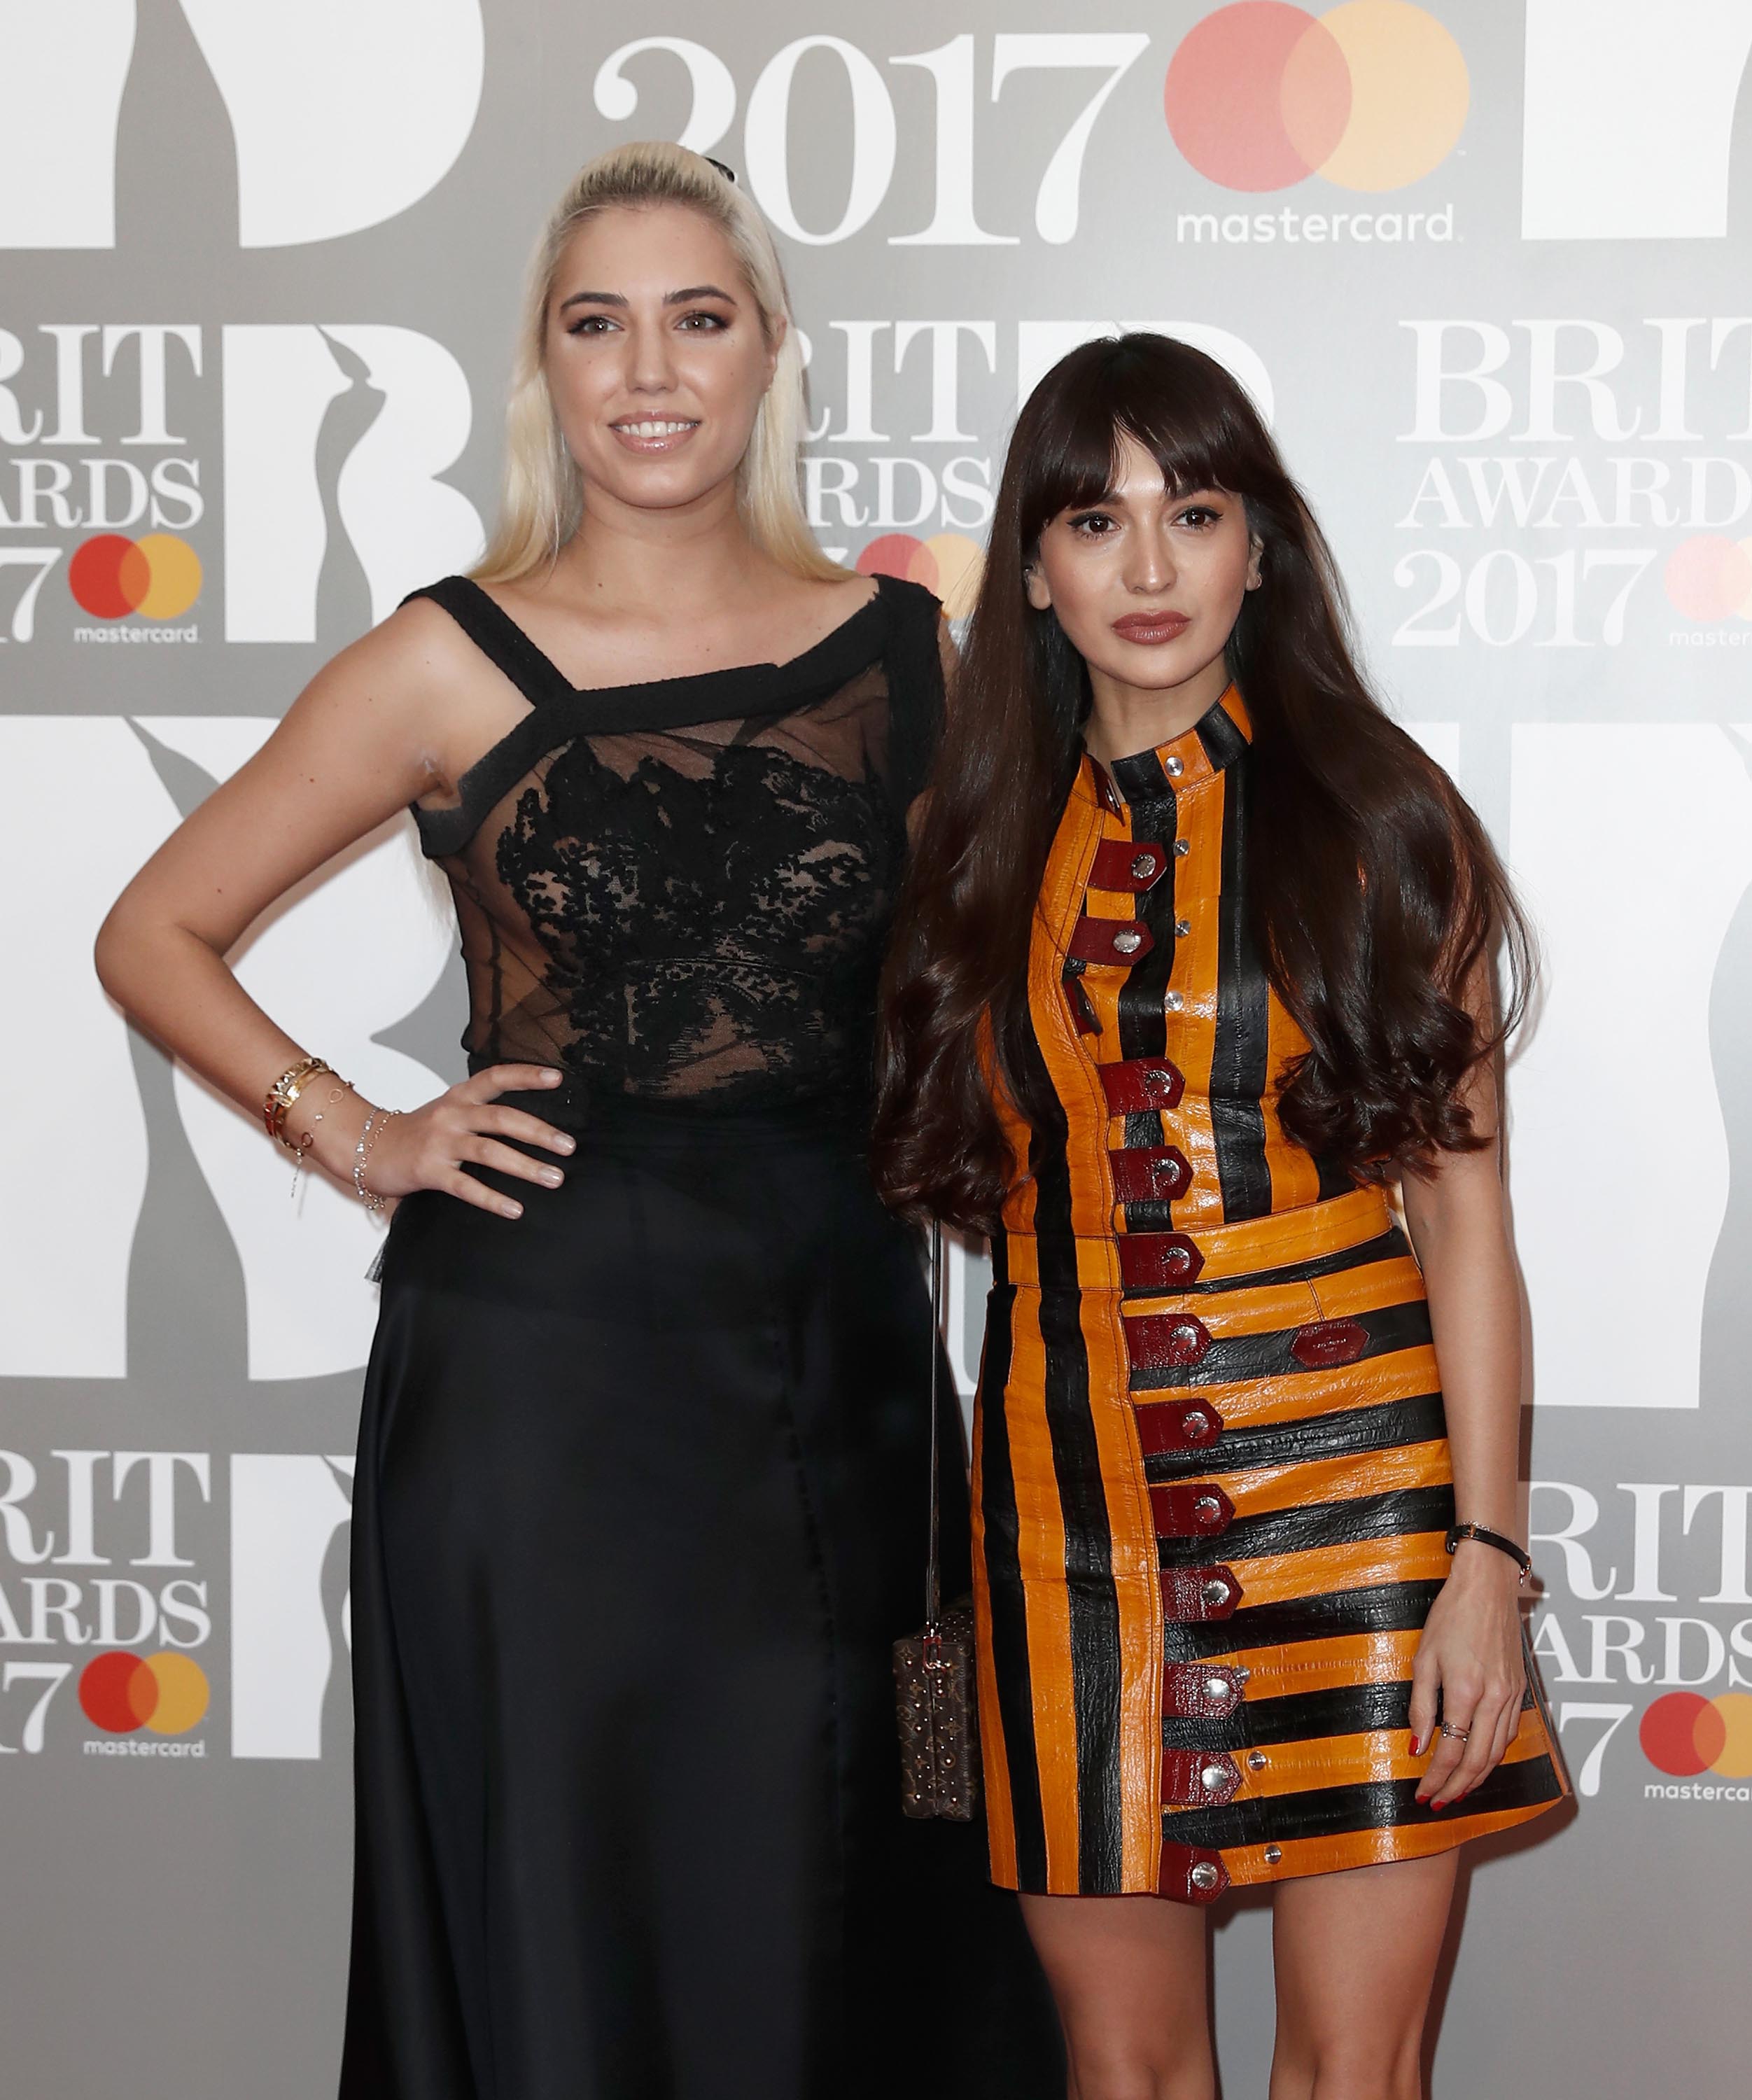 Zara Martin attends The BRIT Awards 2017